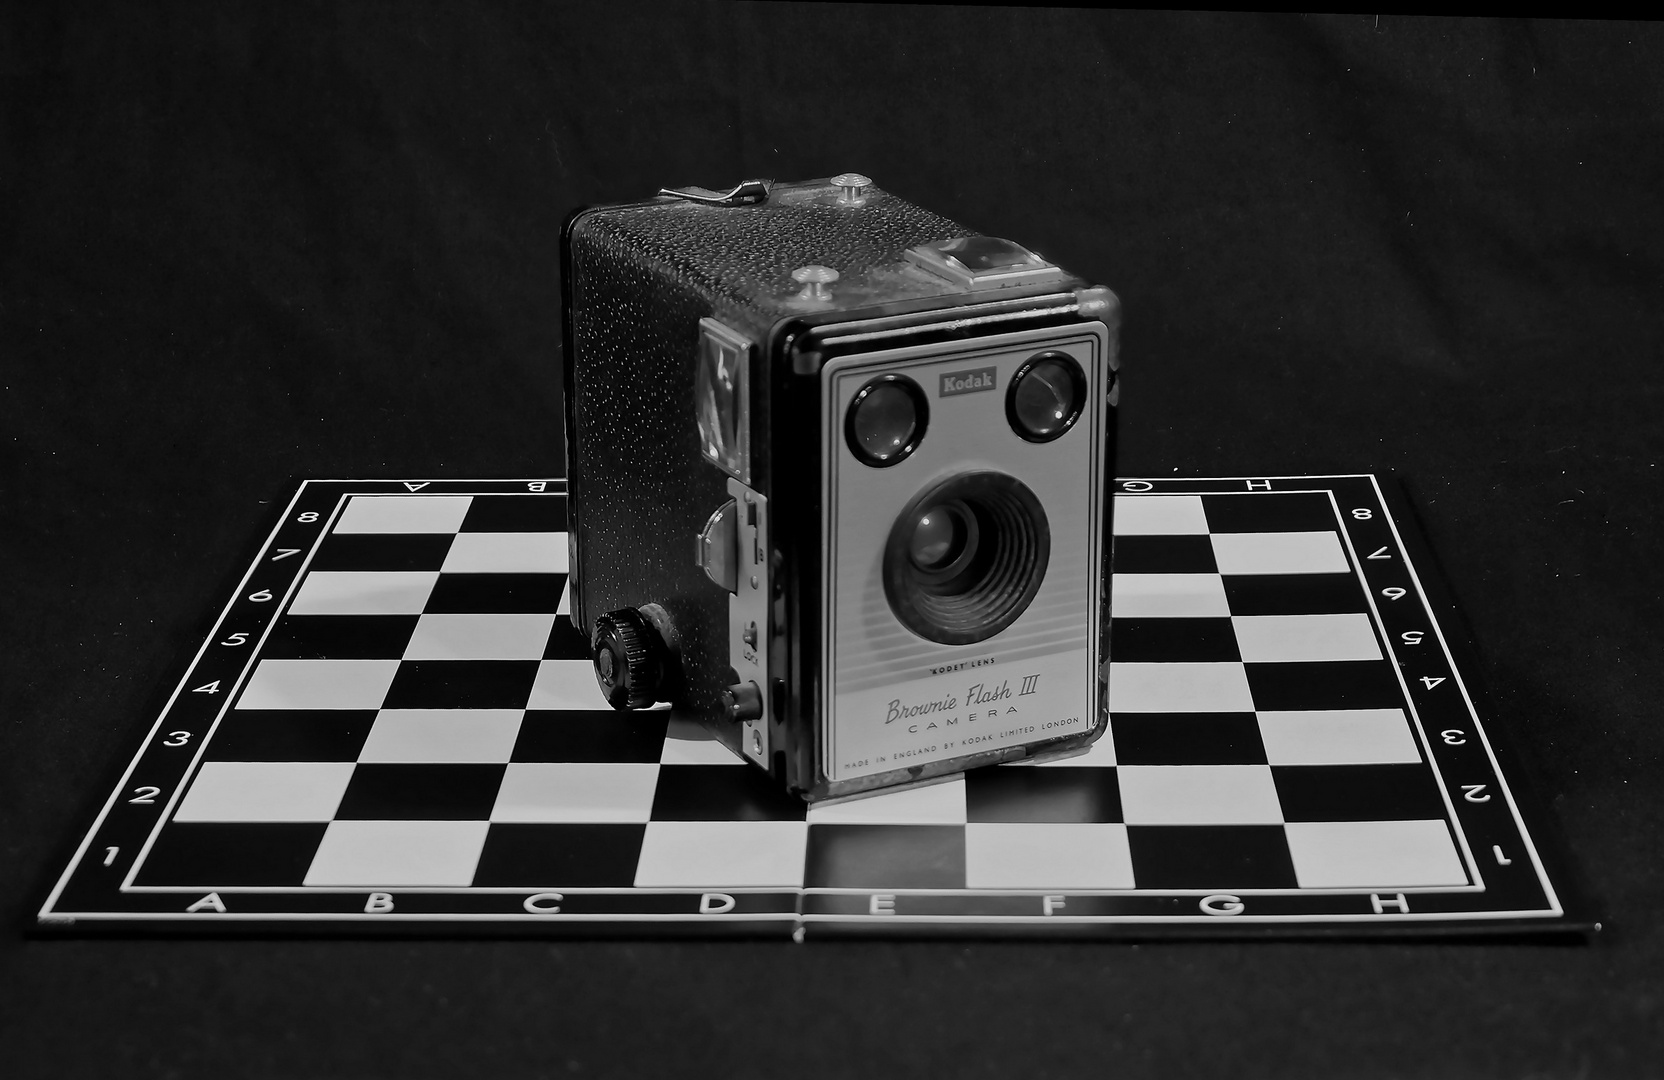 Kodak Brownie Flash 3